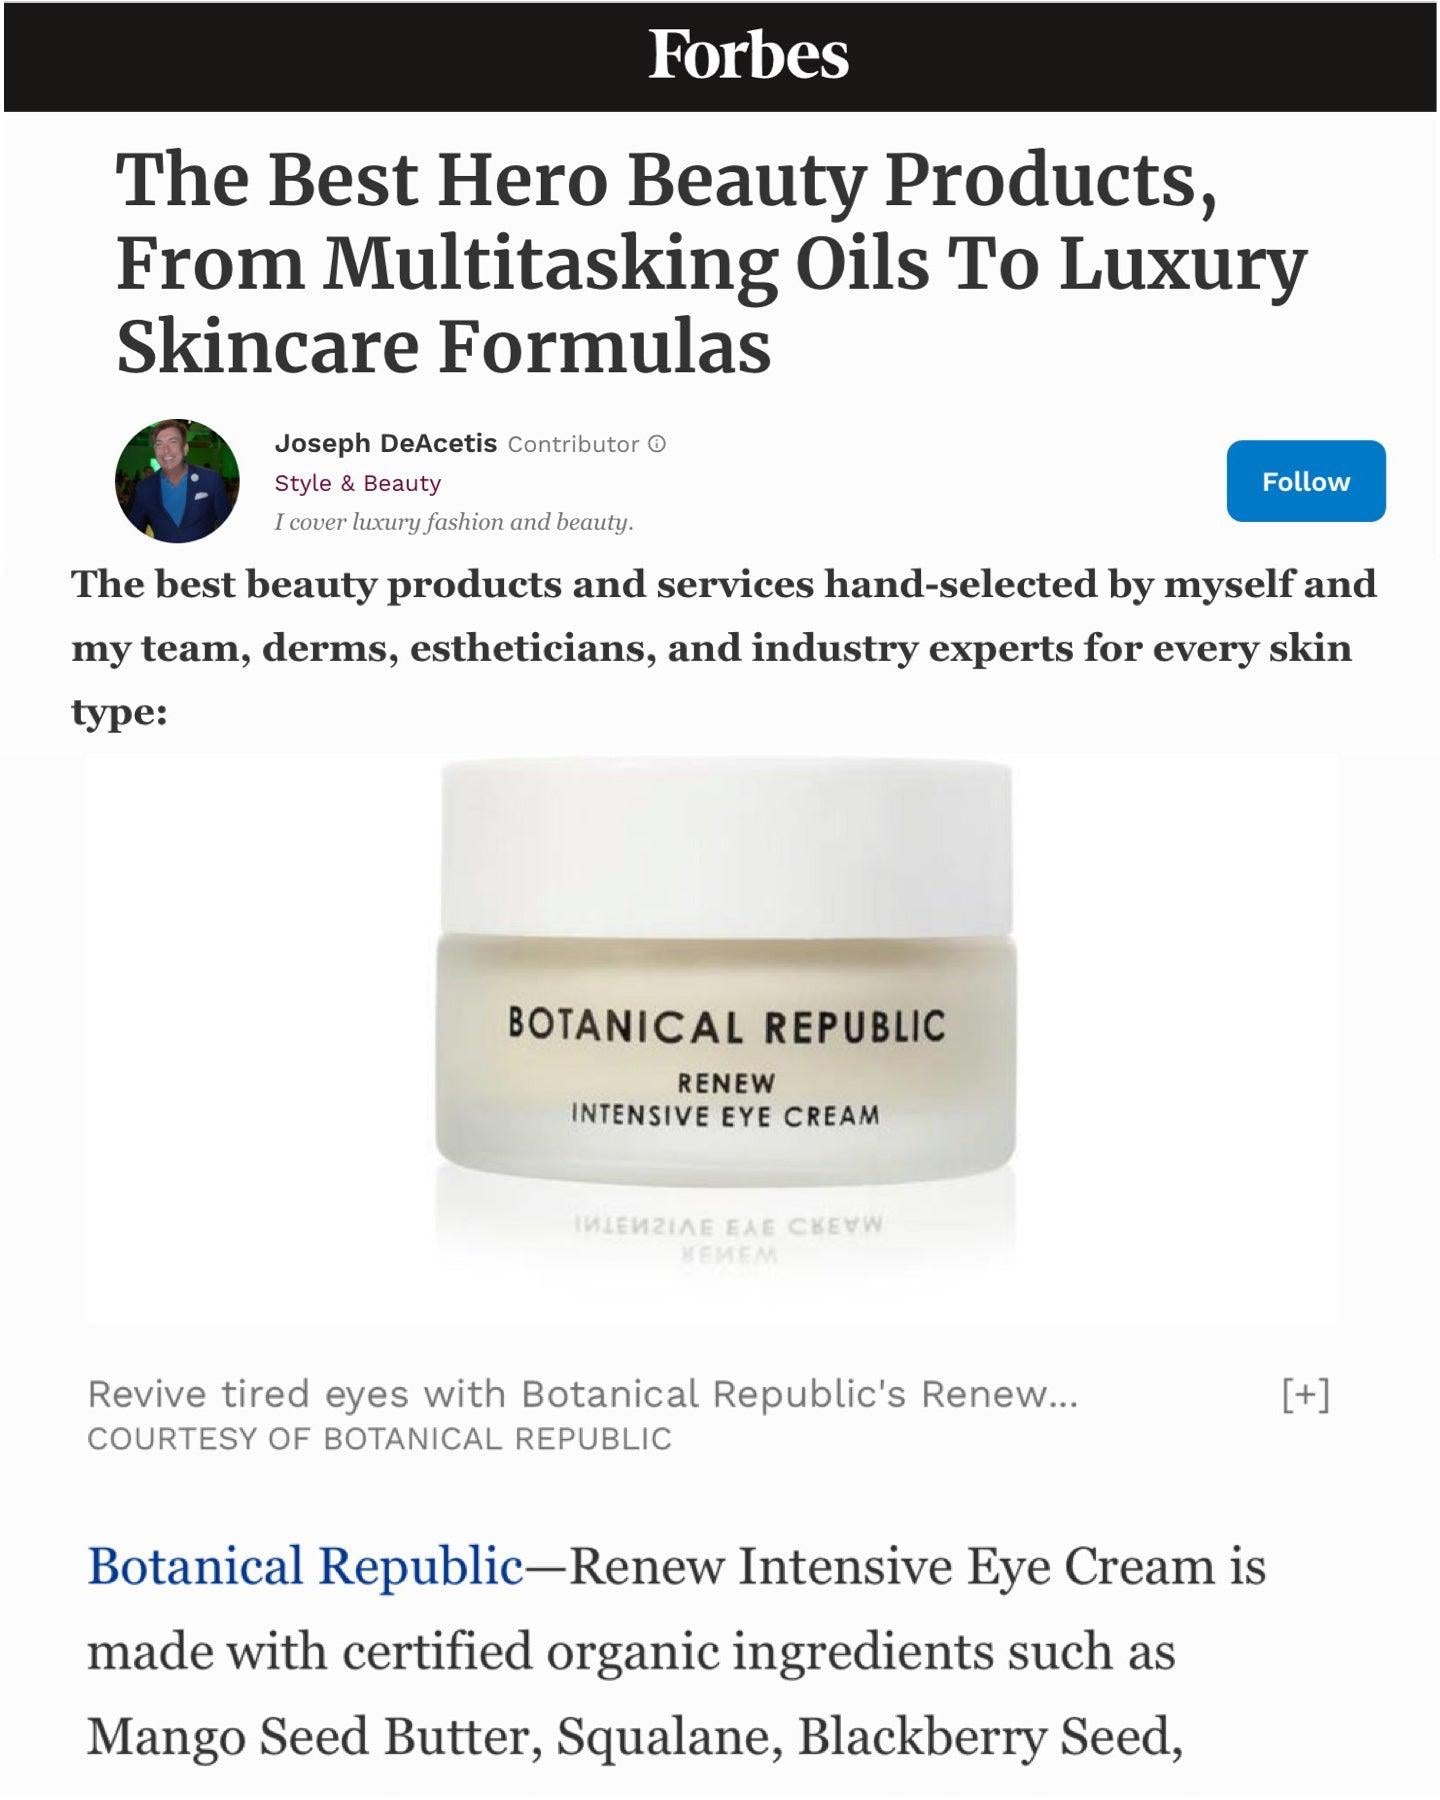 The Best Hero Beauty Products, From Multitasking Oils To Luxury Skincare Formulas - Botanical Republic